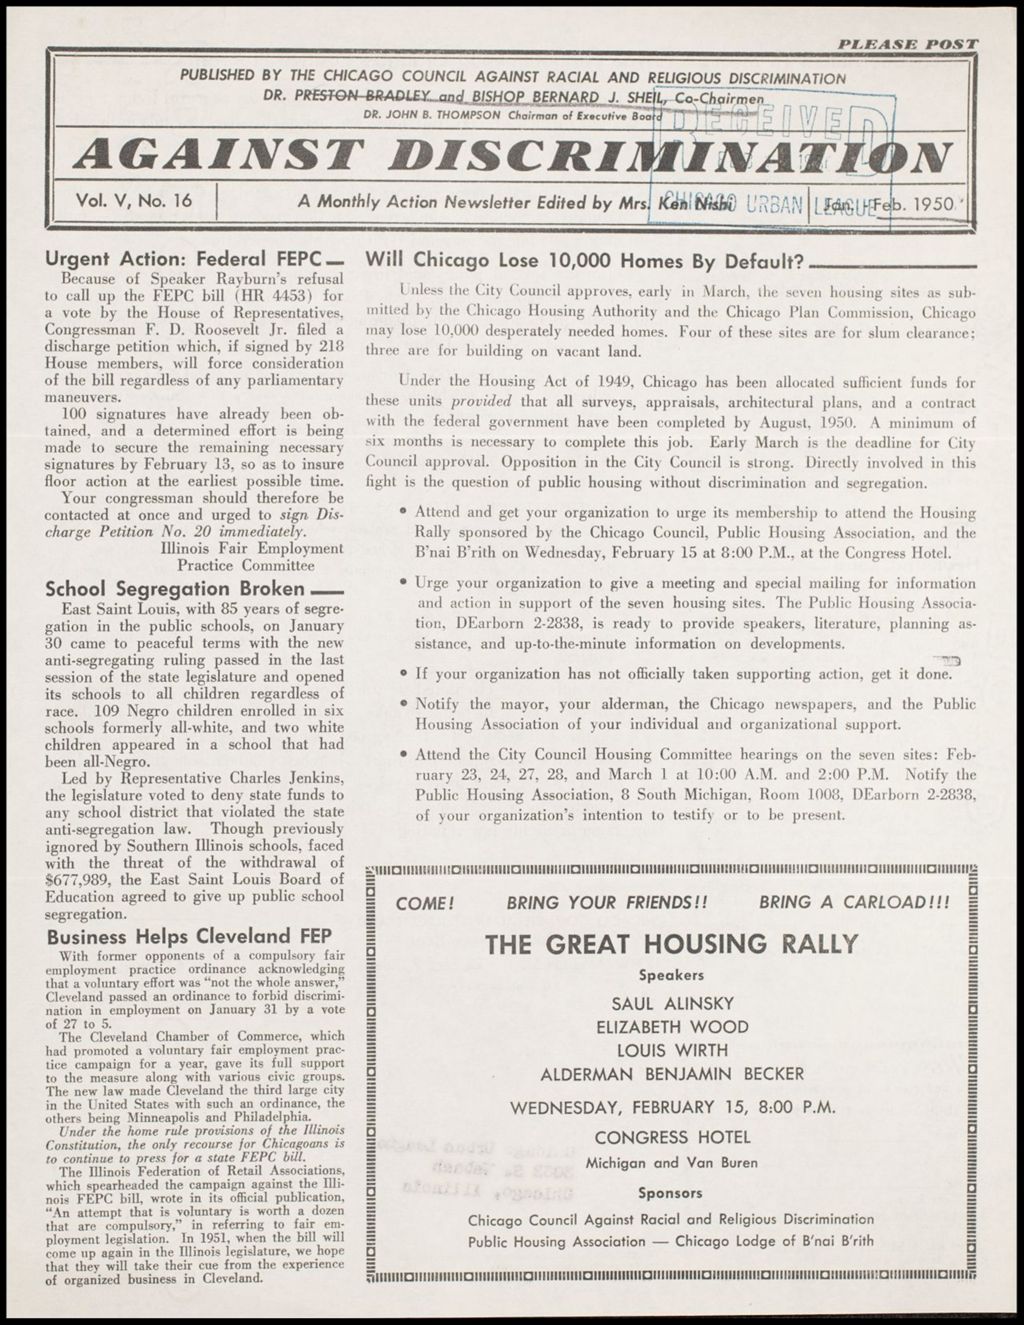 Miniature of Chicago Council Against Racial and Religious Discrimination, 1950-1955 (Folder I-2805)